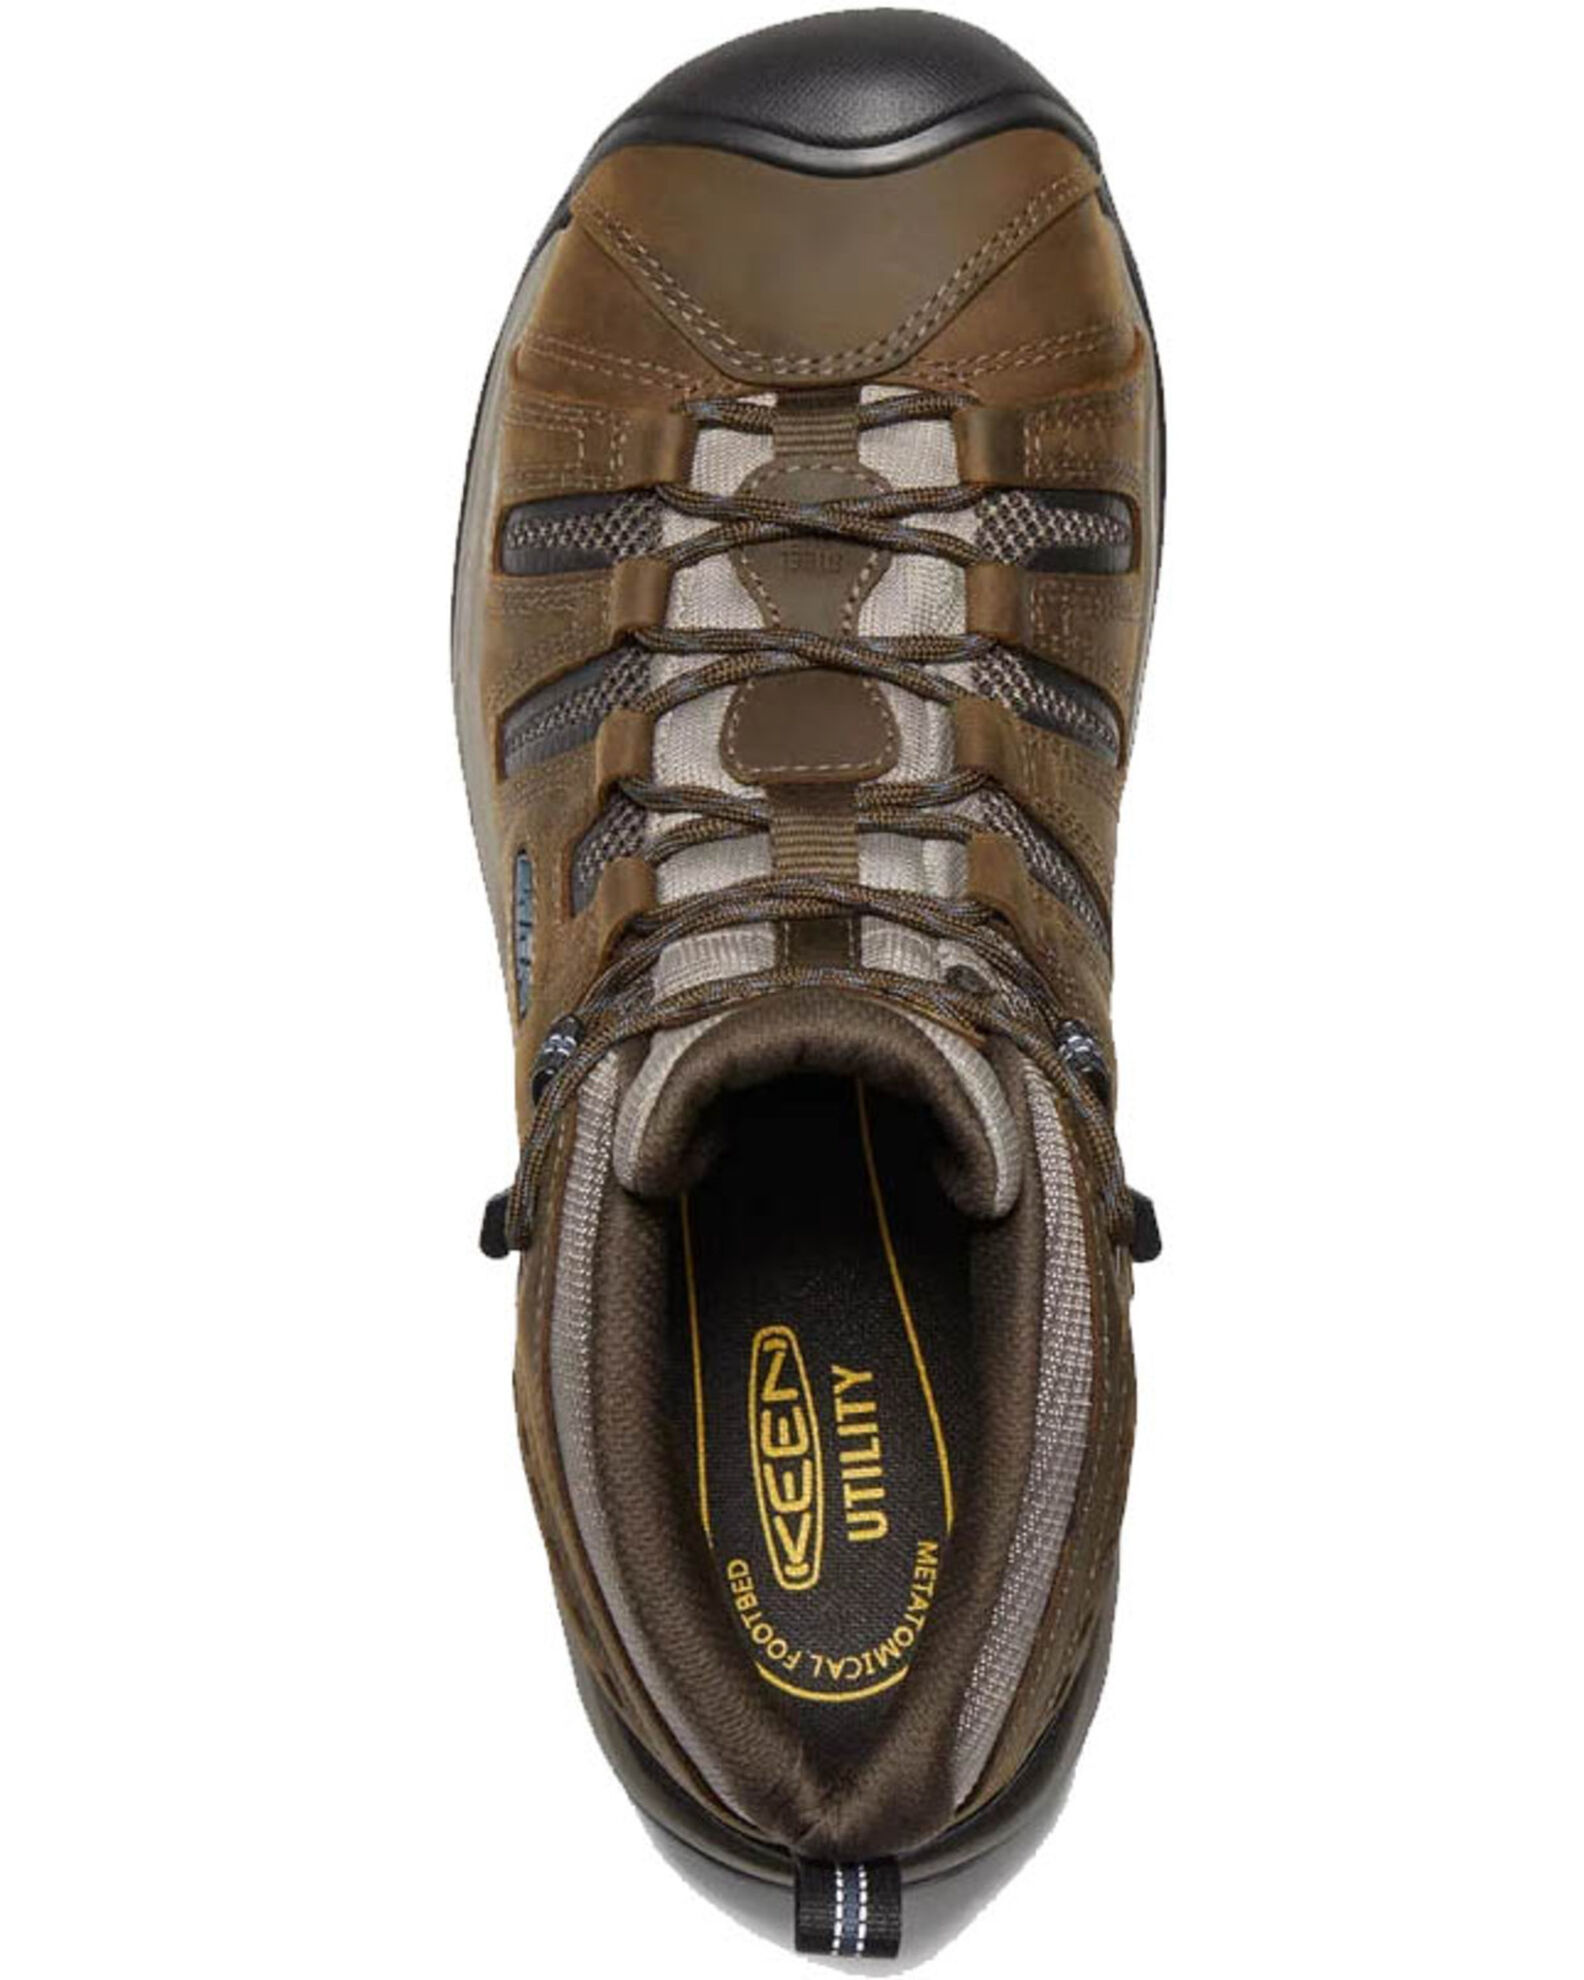 Product Name: Keen Men's Flint II Waterproof Work Boots - Steel Toe